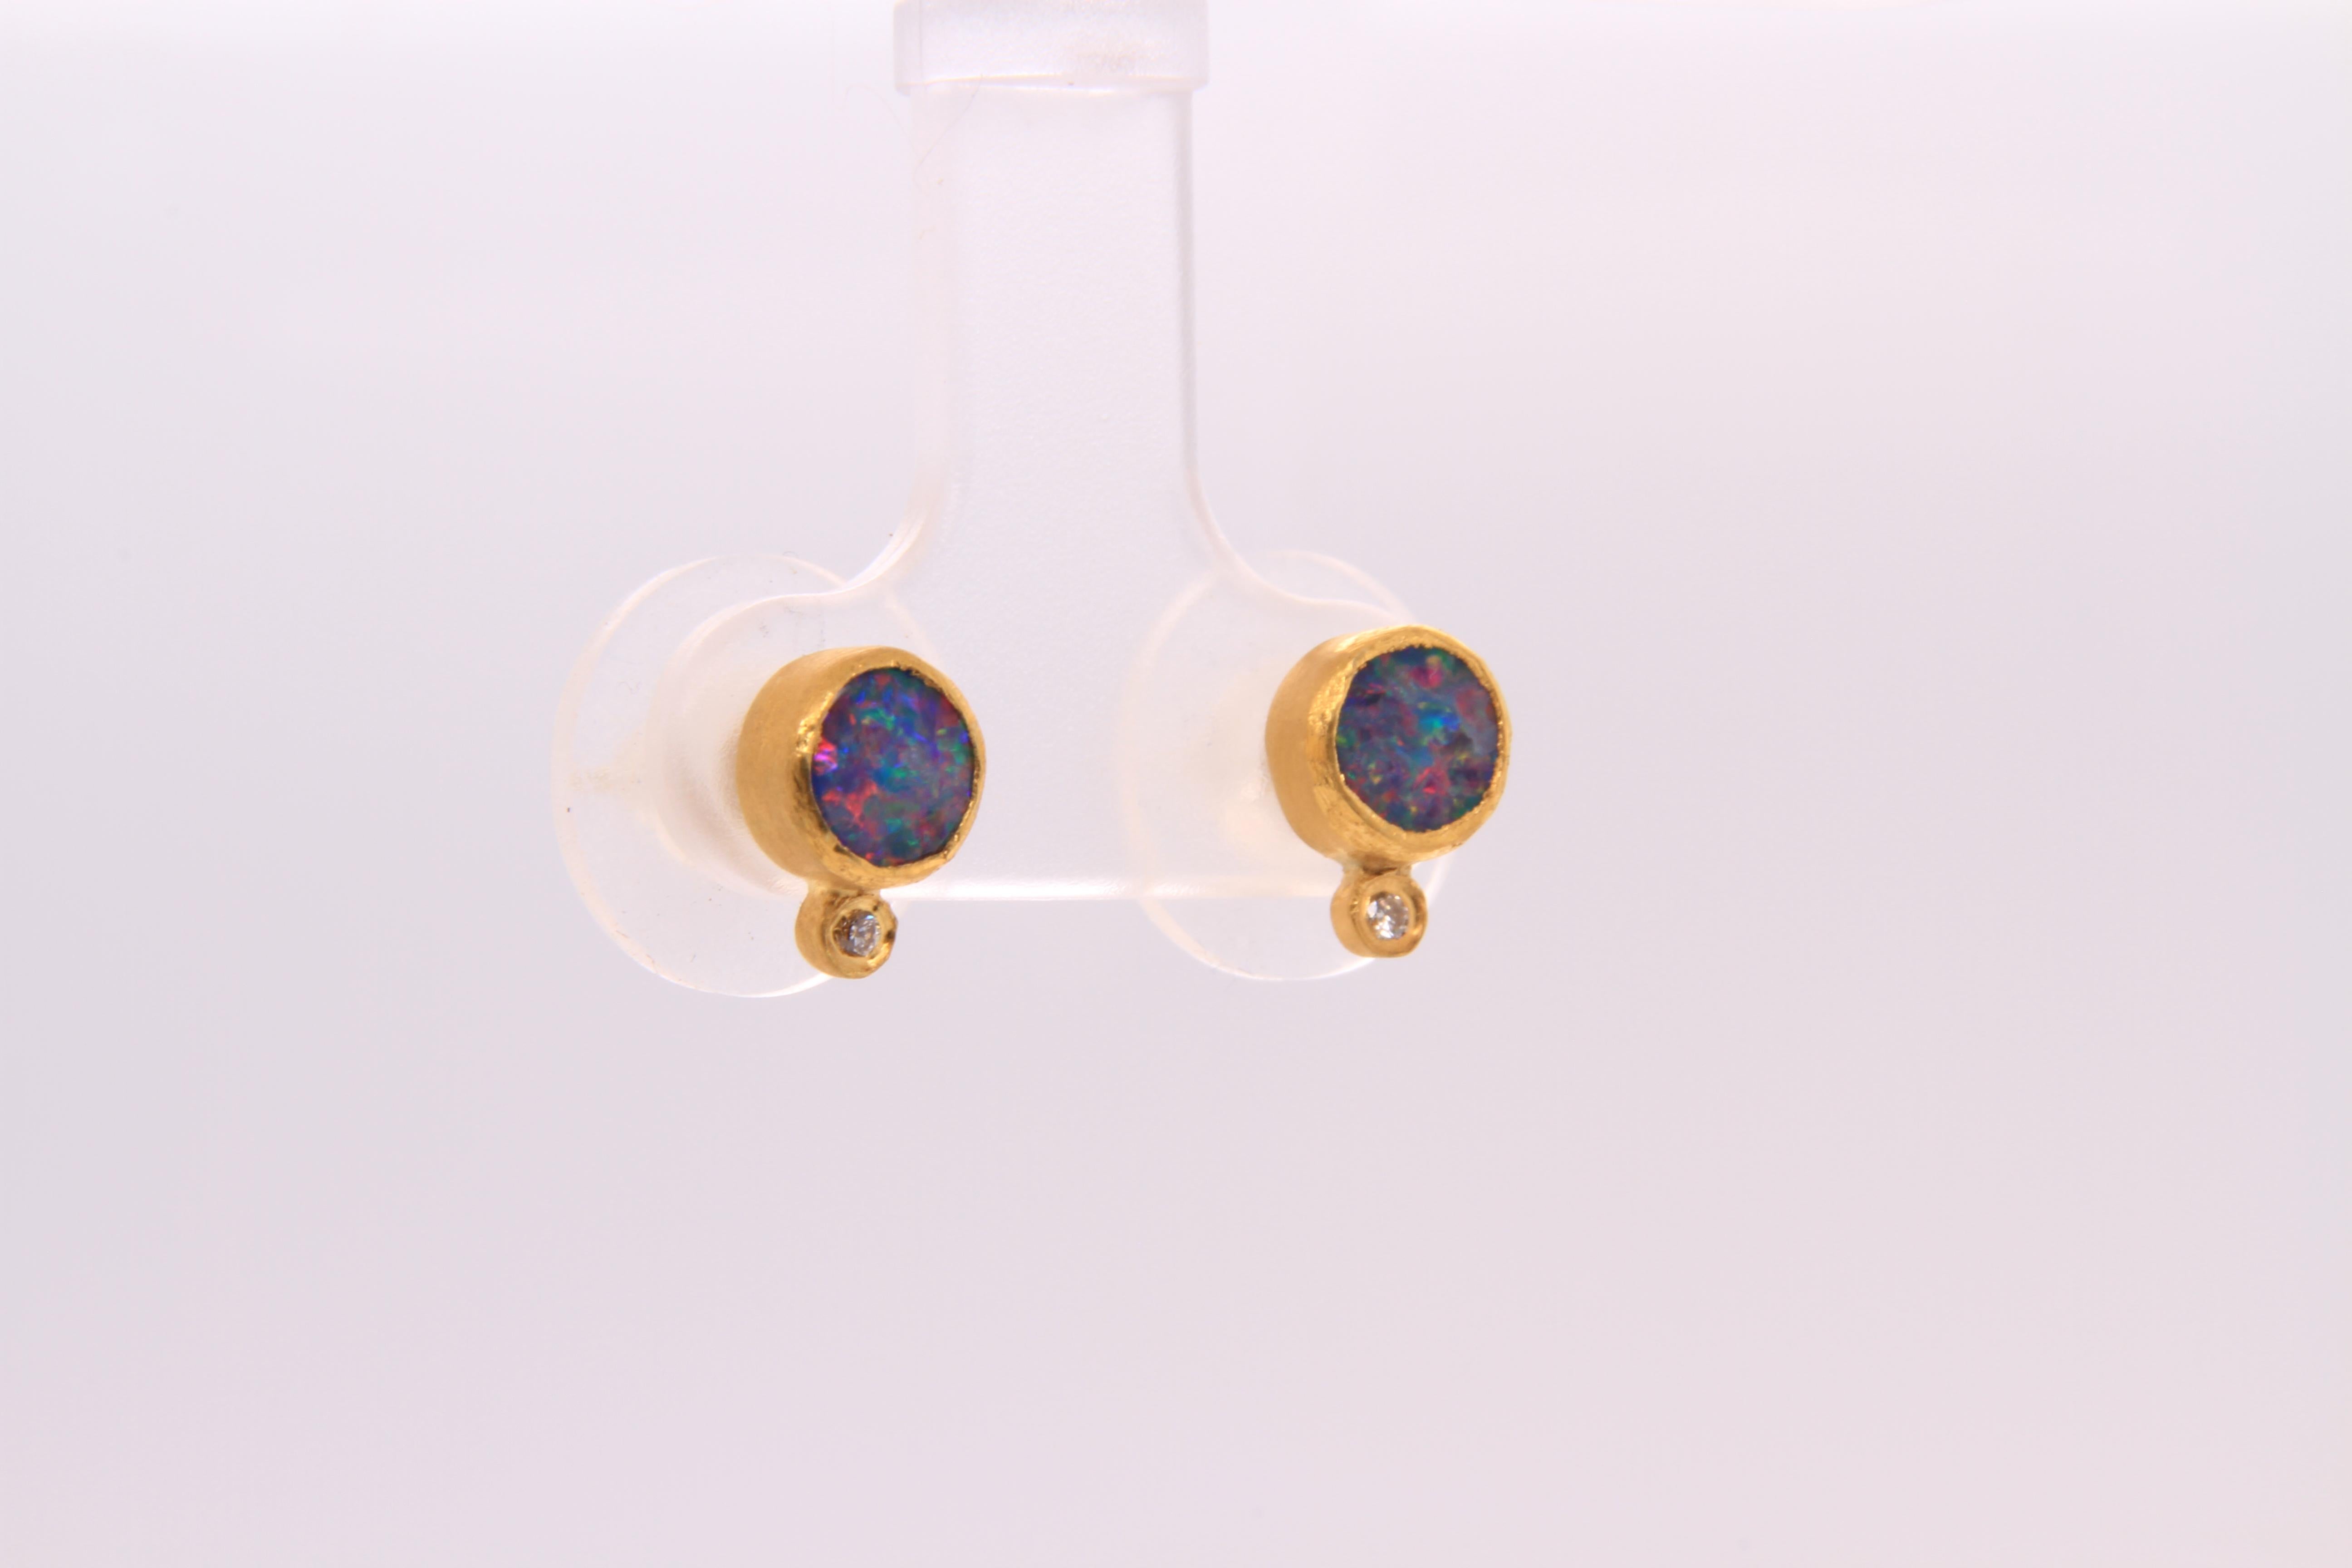 Bright Rainbow Opal Stud Earrings with Diamonds, Solid 24K by Kurtulan 5